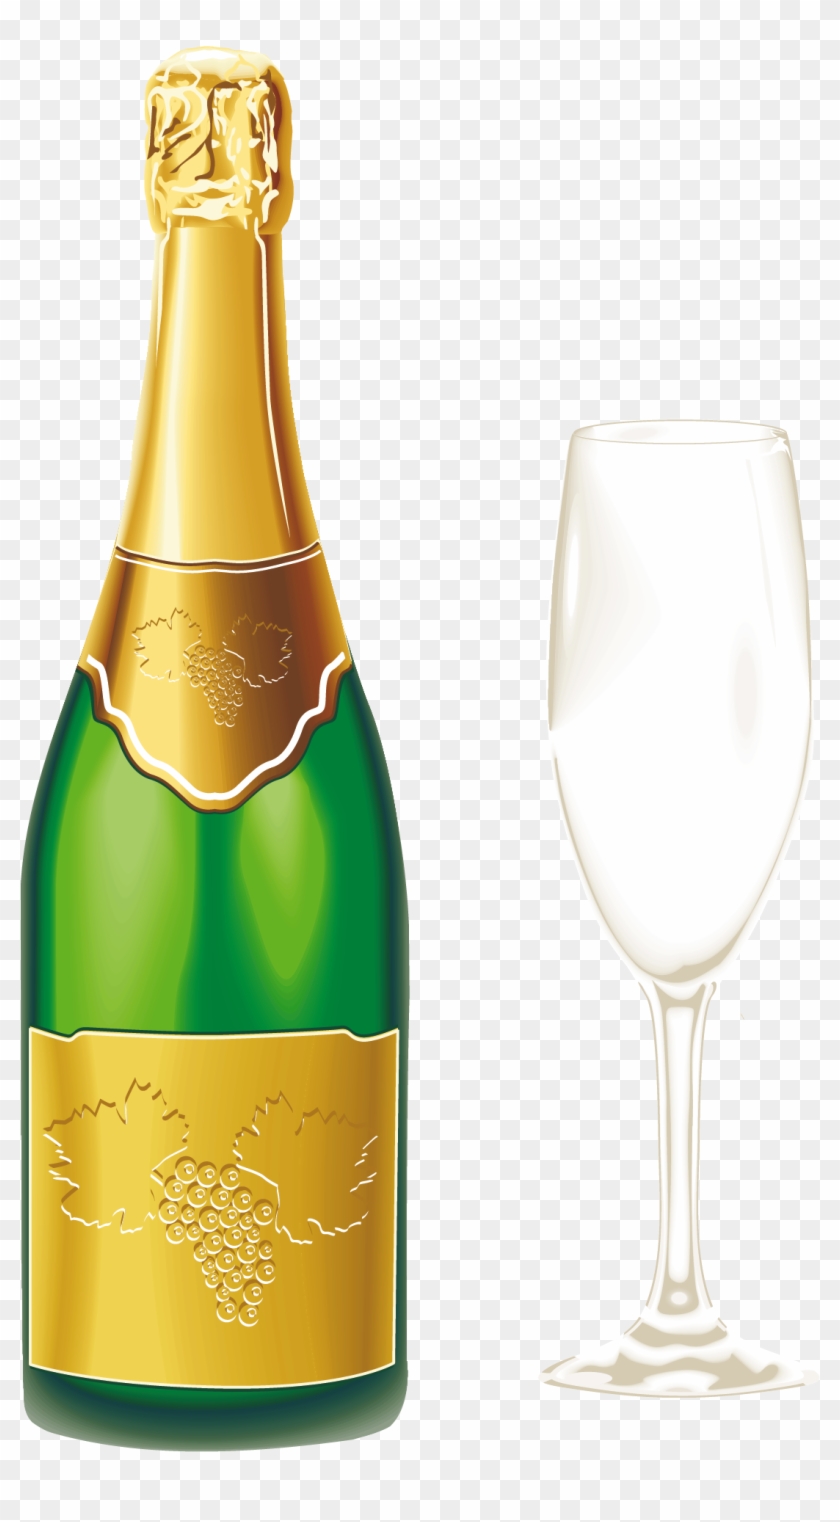 Pin By Виктория On Новый Год, Зима - Champagne Bottle Clip Art #57989